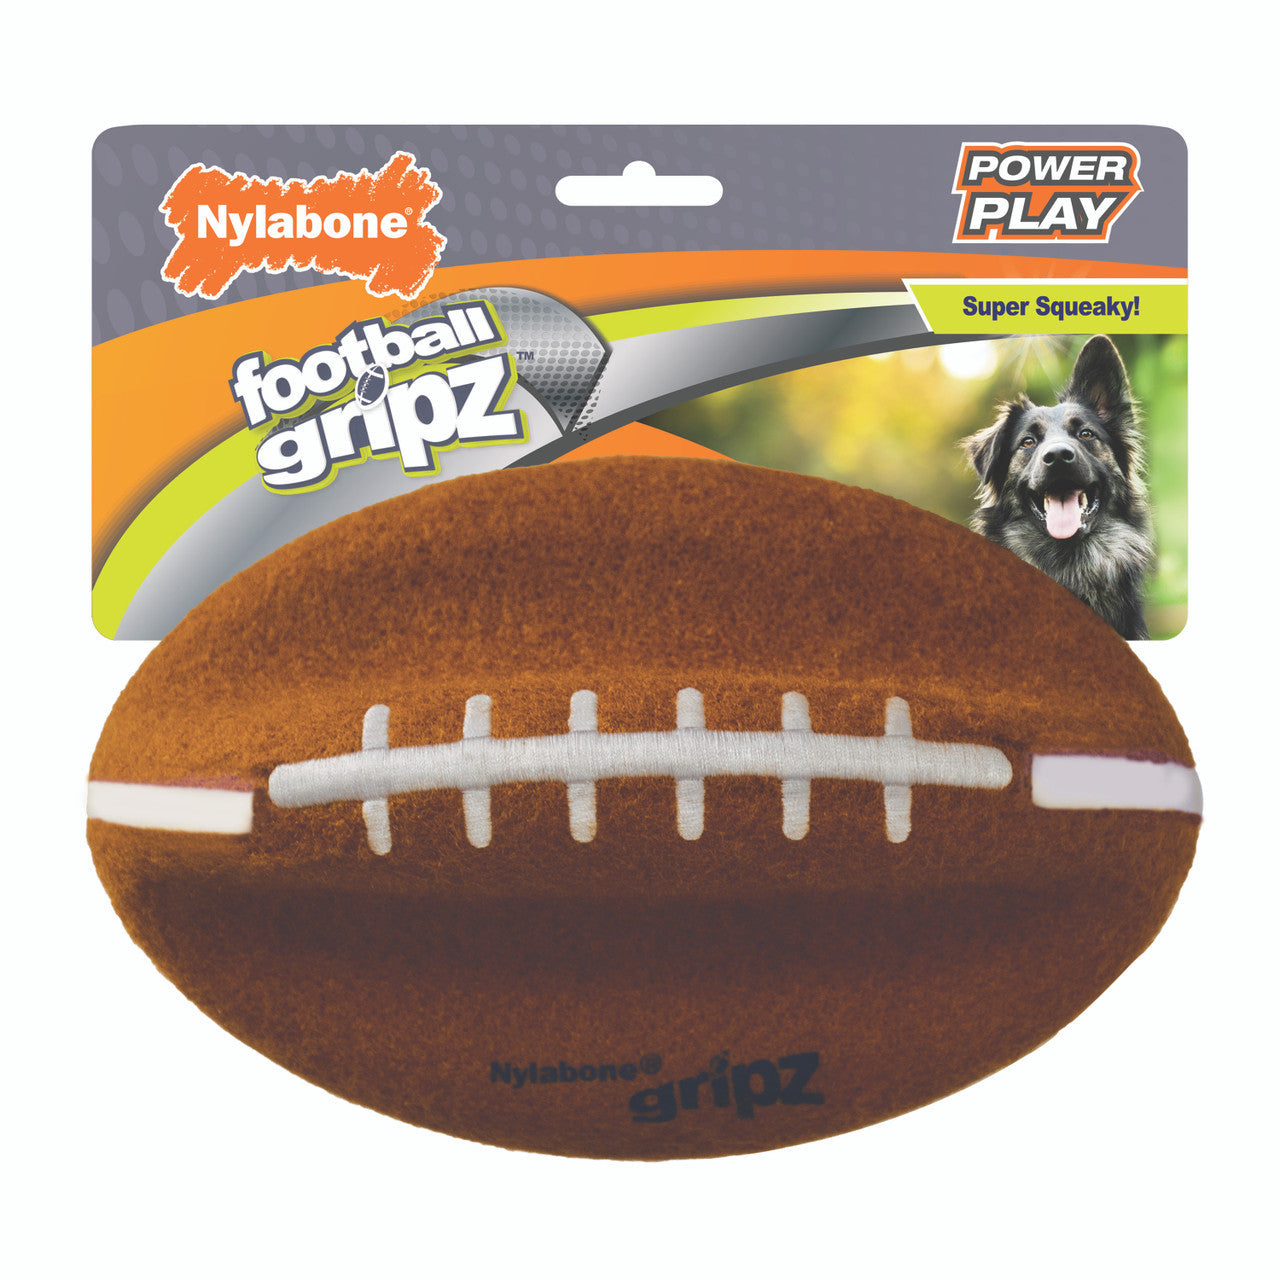 Nylabone Power Play Dog Football Gripz Large 8.5" (1 Count)